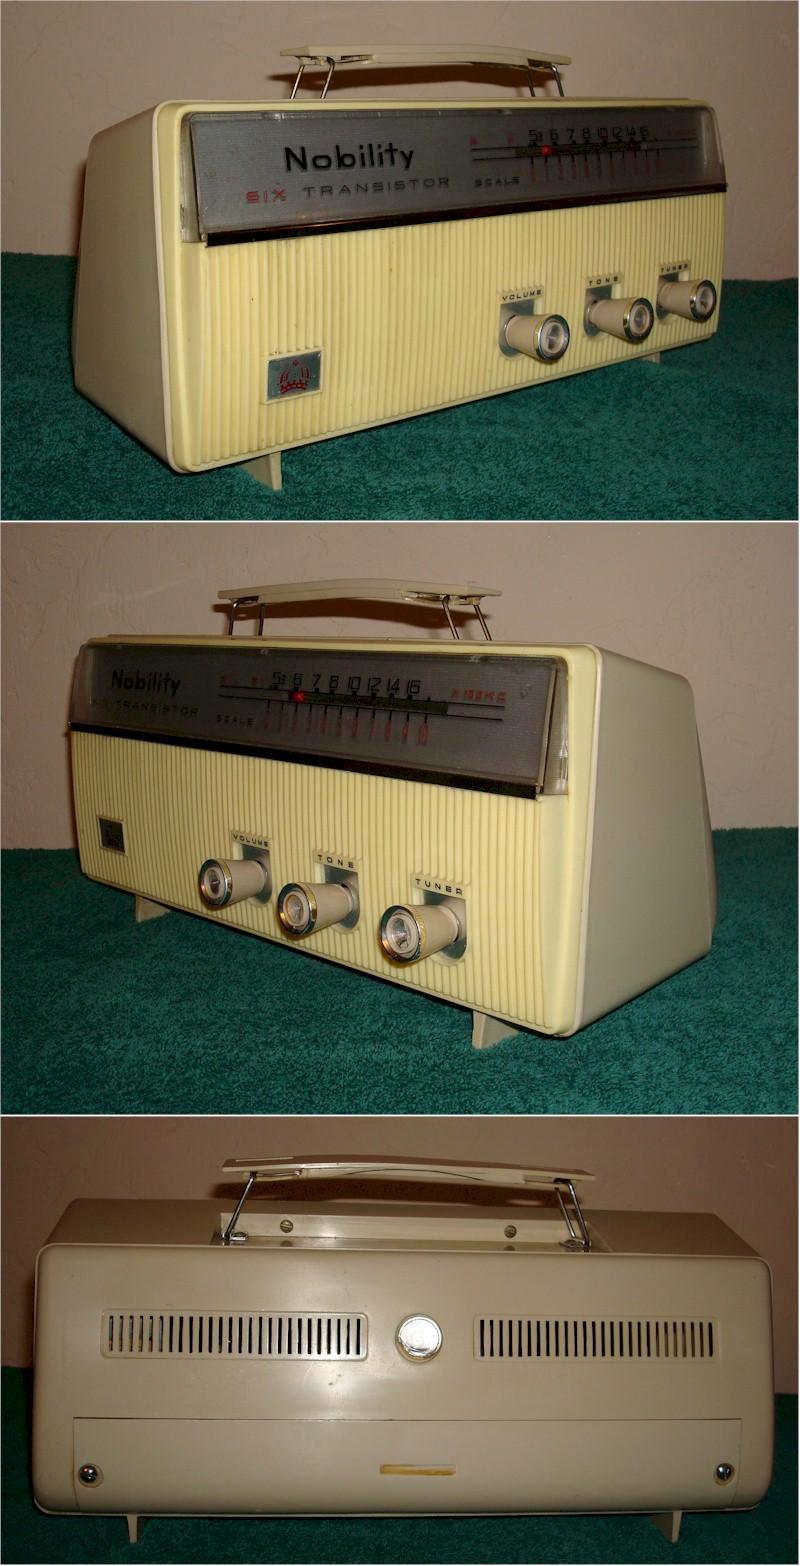 Nobility 6 Transistor (1961)